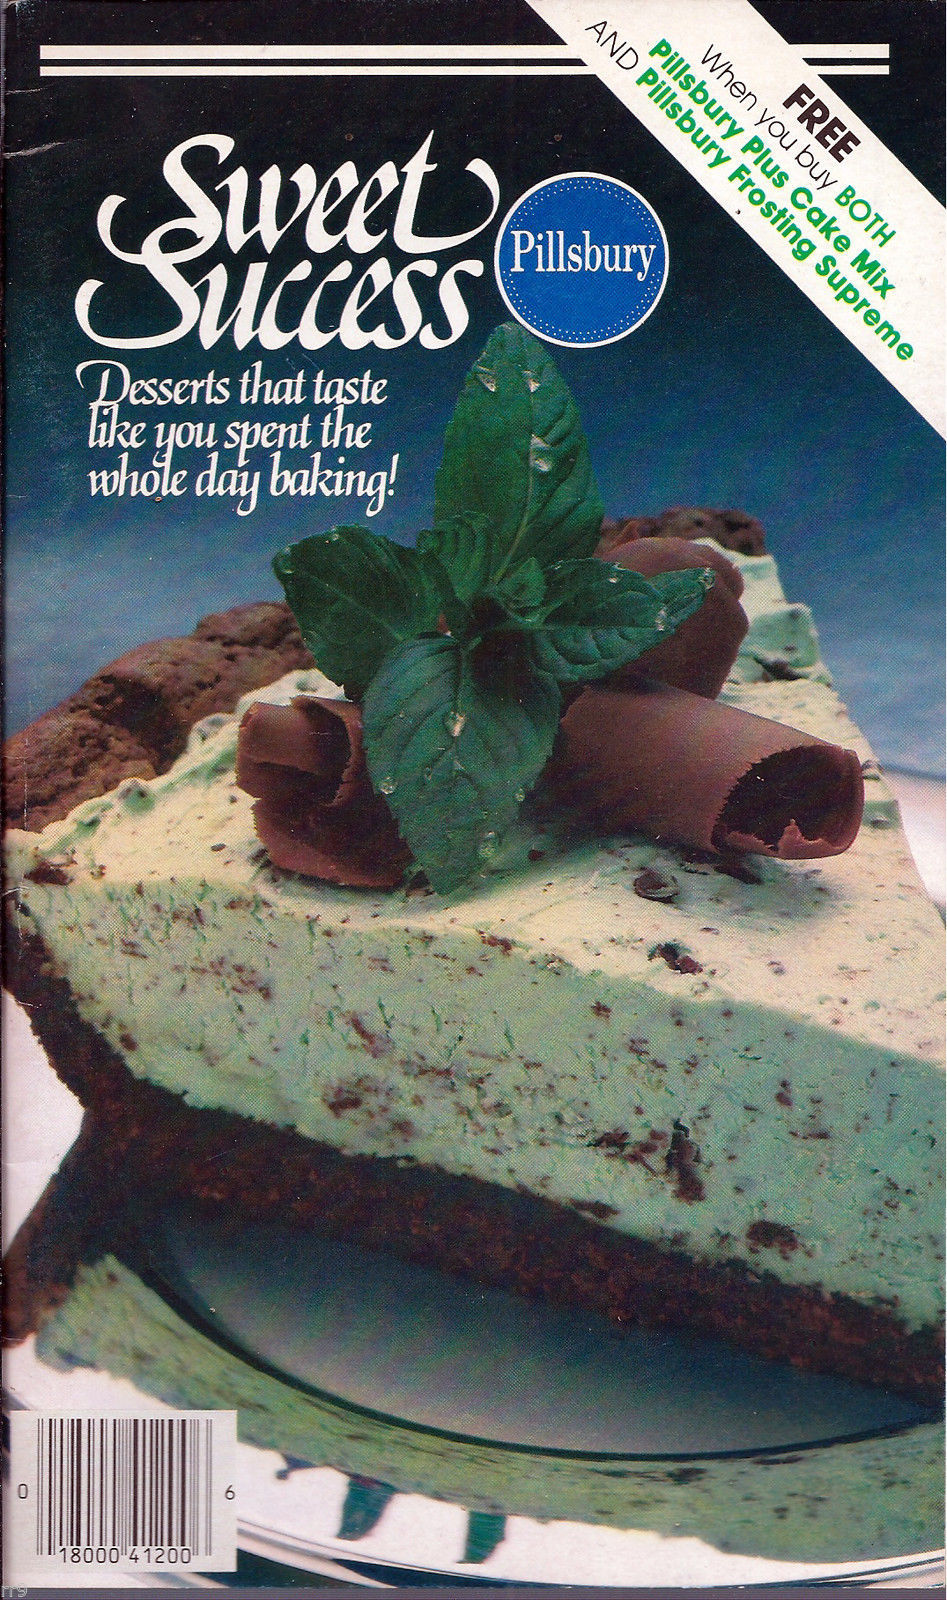 Sweet Success by Pillsbury Cookbook 1980 Easy Desserts - $1.50